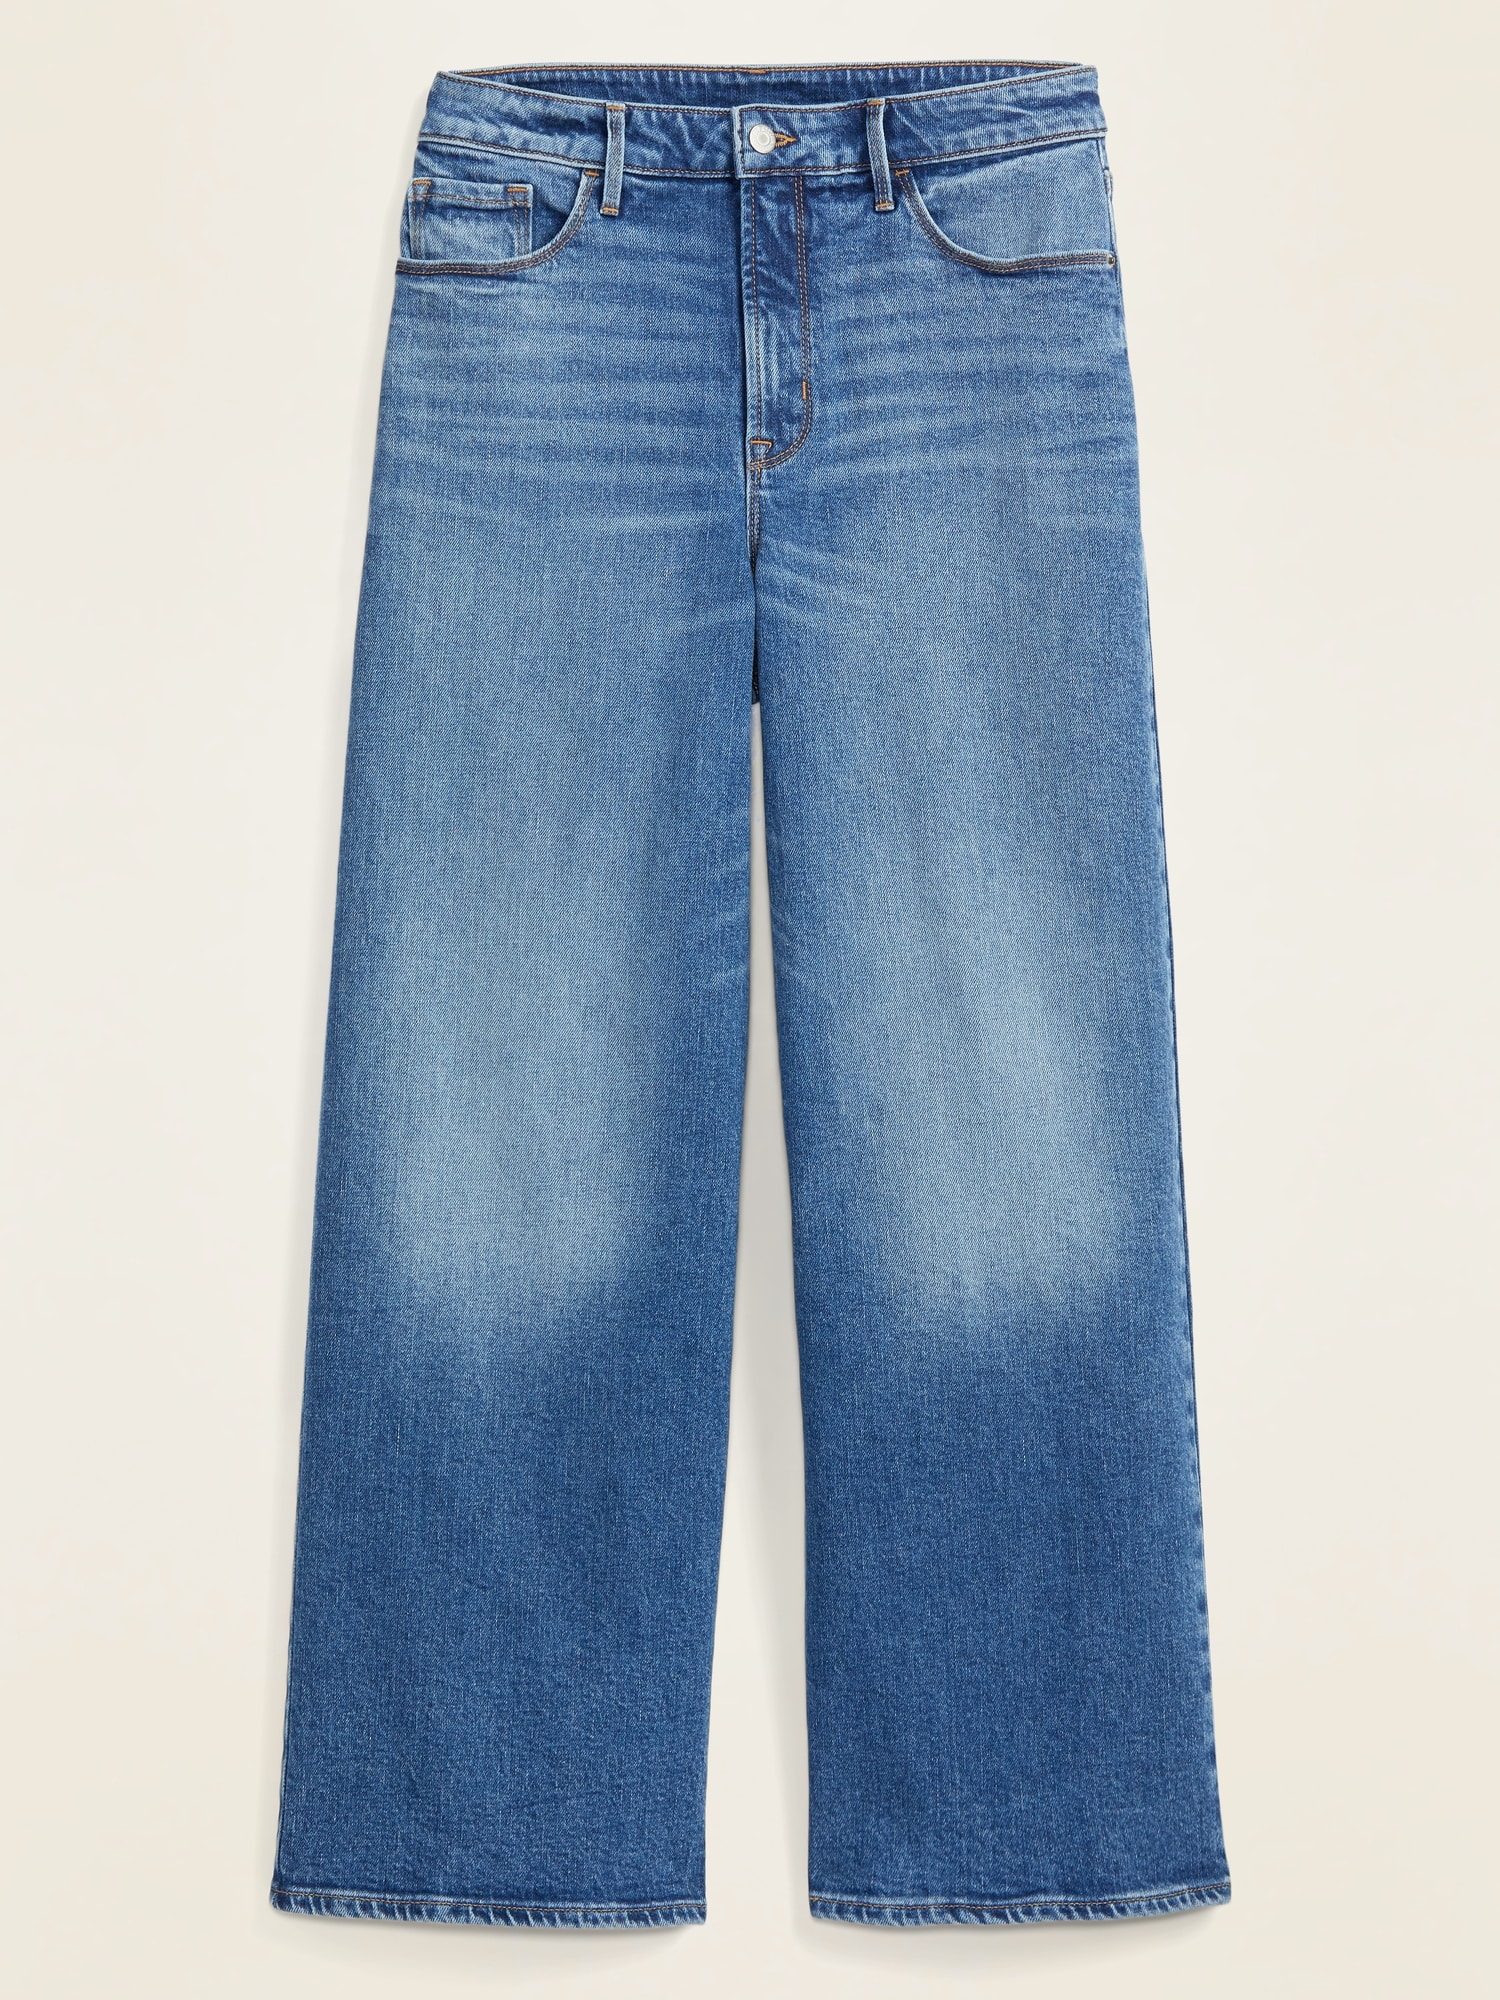 Extra HighWaisted WideLeg Jeans for Women Old Navy